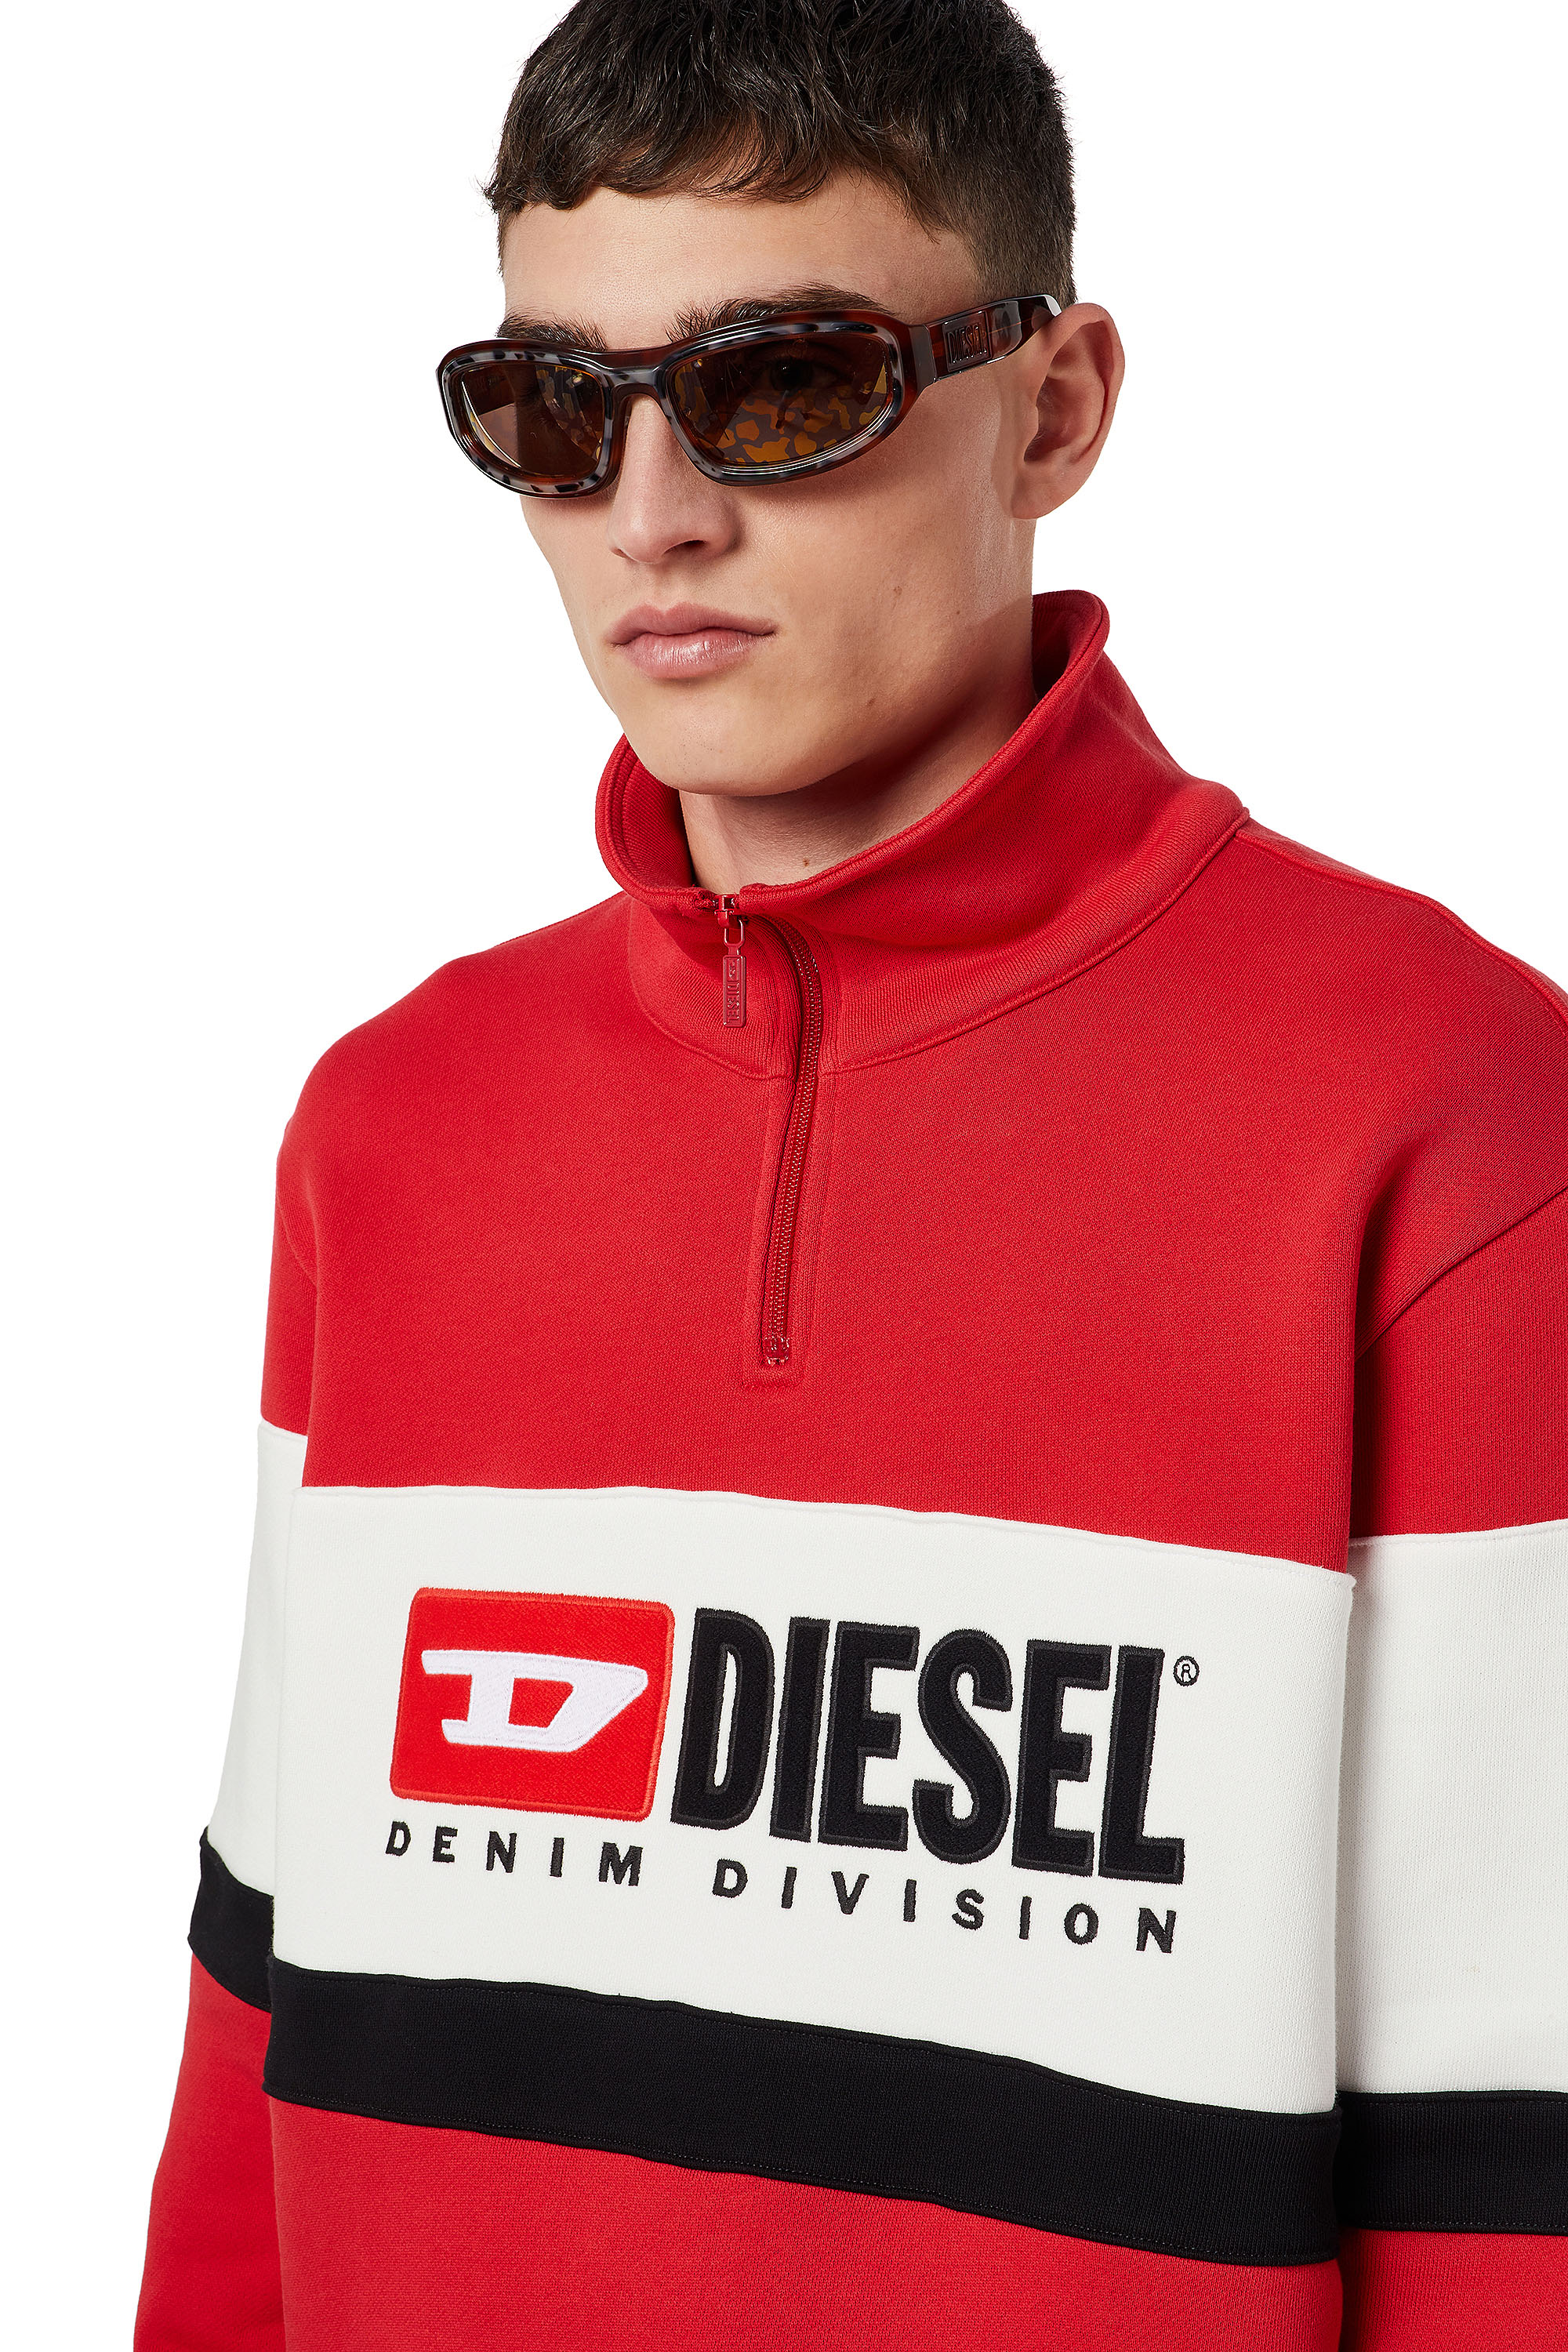 Diesel - S-SAINT-DIVISION, Red - Image 3